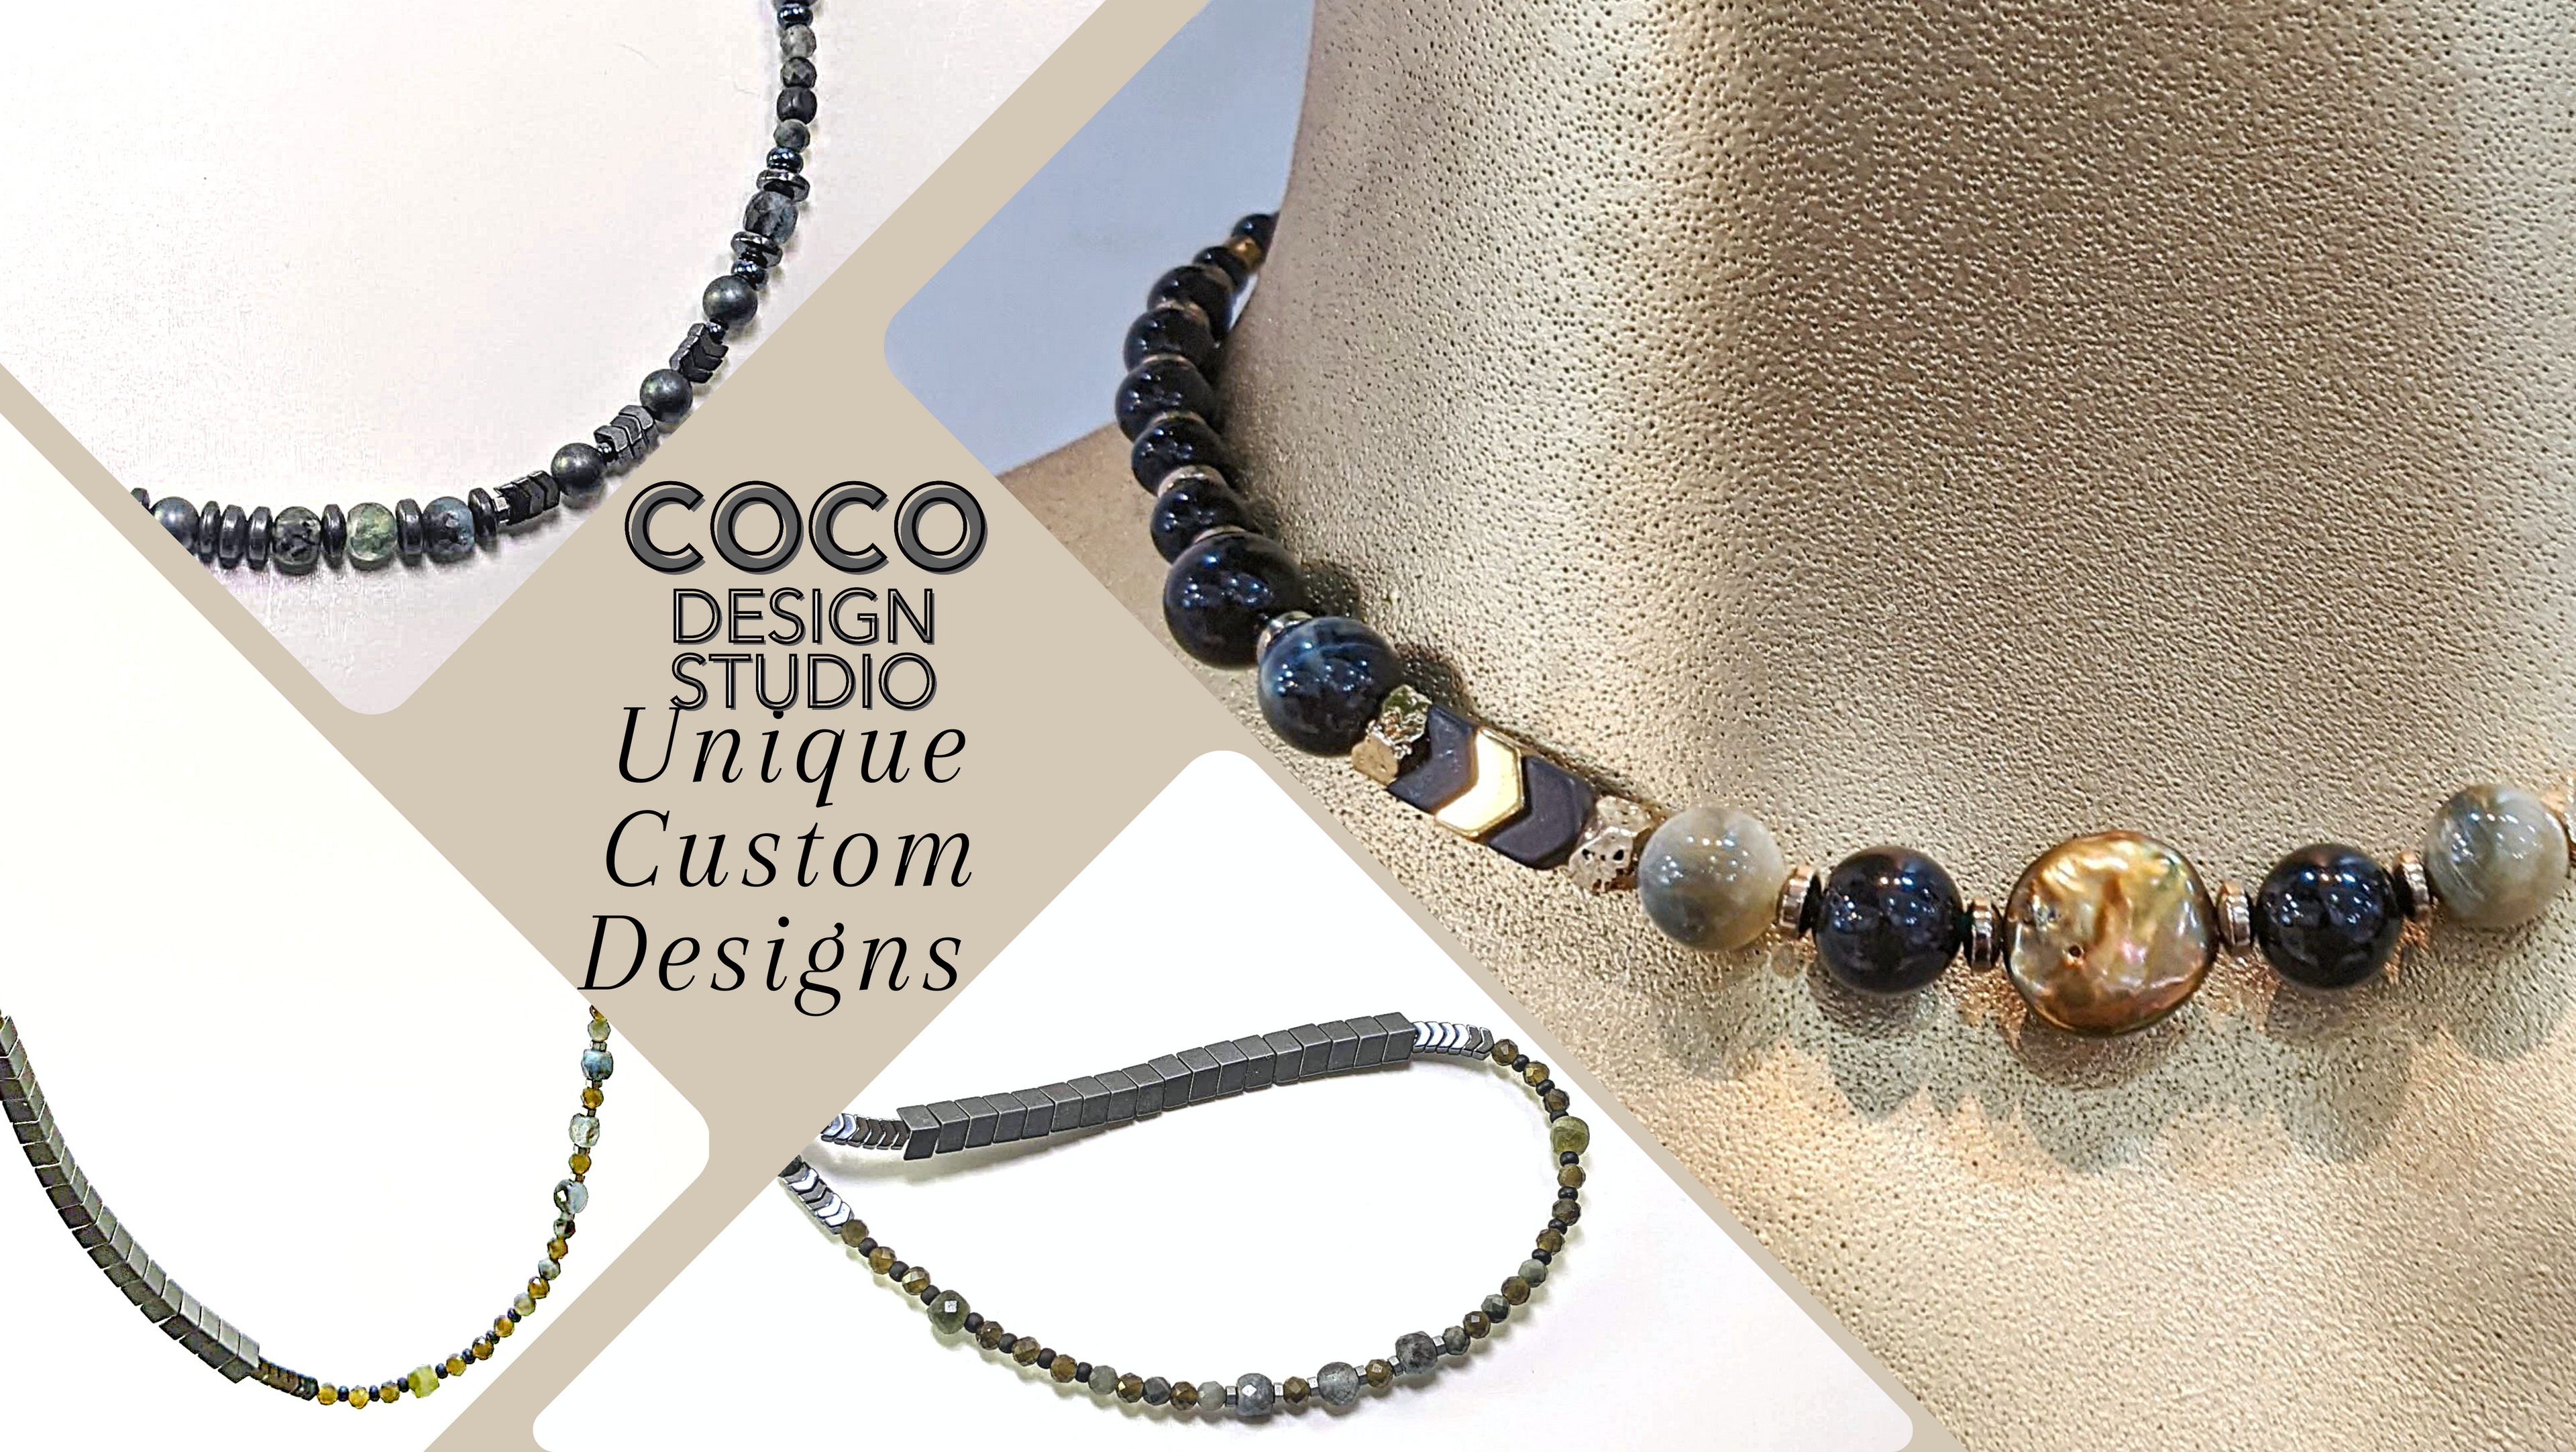 Coco Design Studios Handmade Natural Healing Stone Jewelry & Home Deco